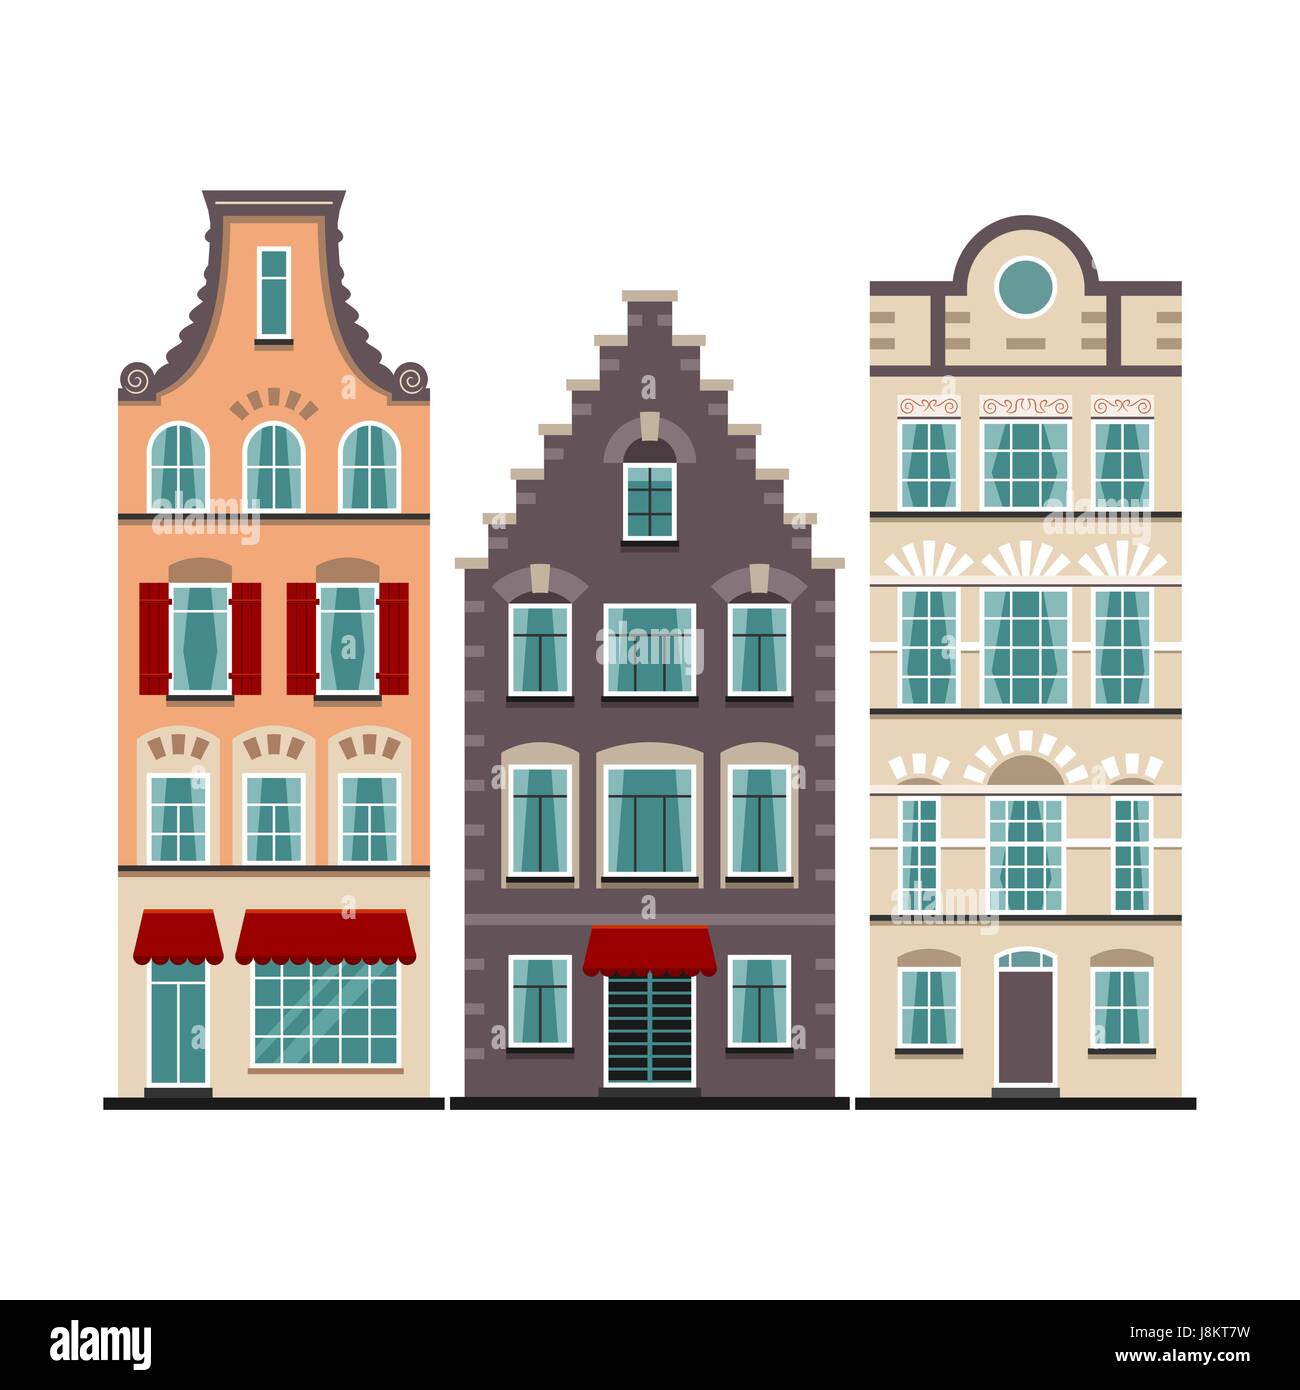 Set of 3 Amsterdam old houses cartoon facades Stock Vector